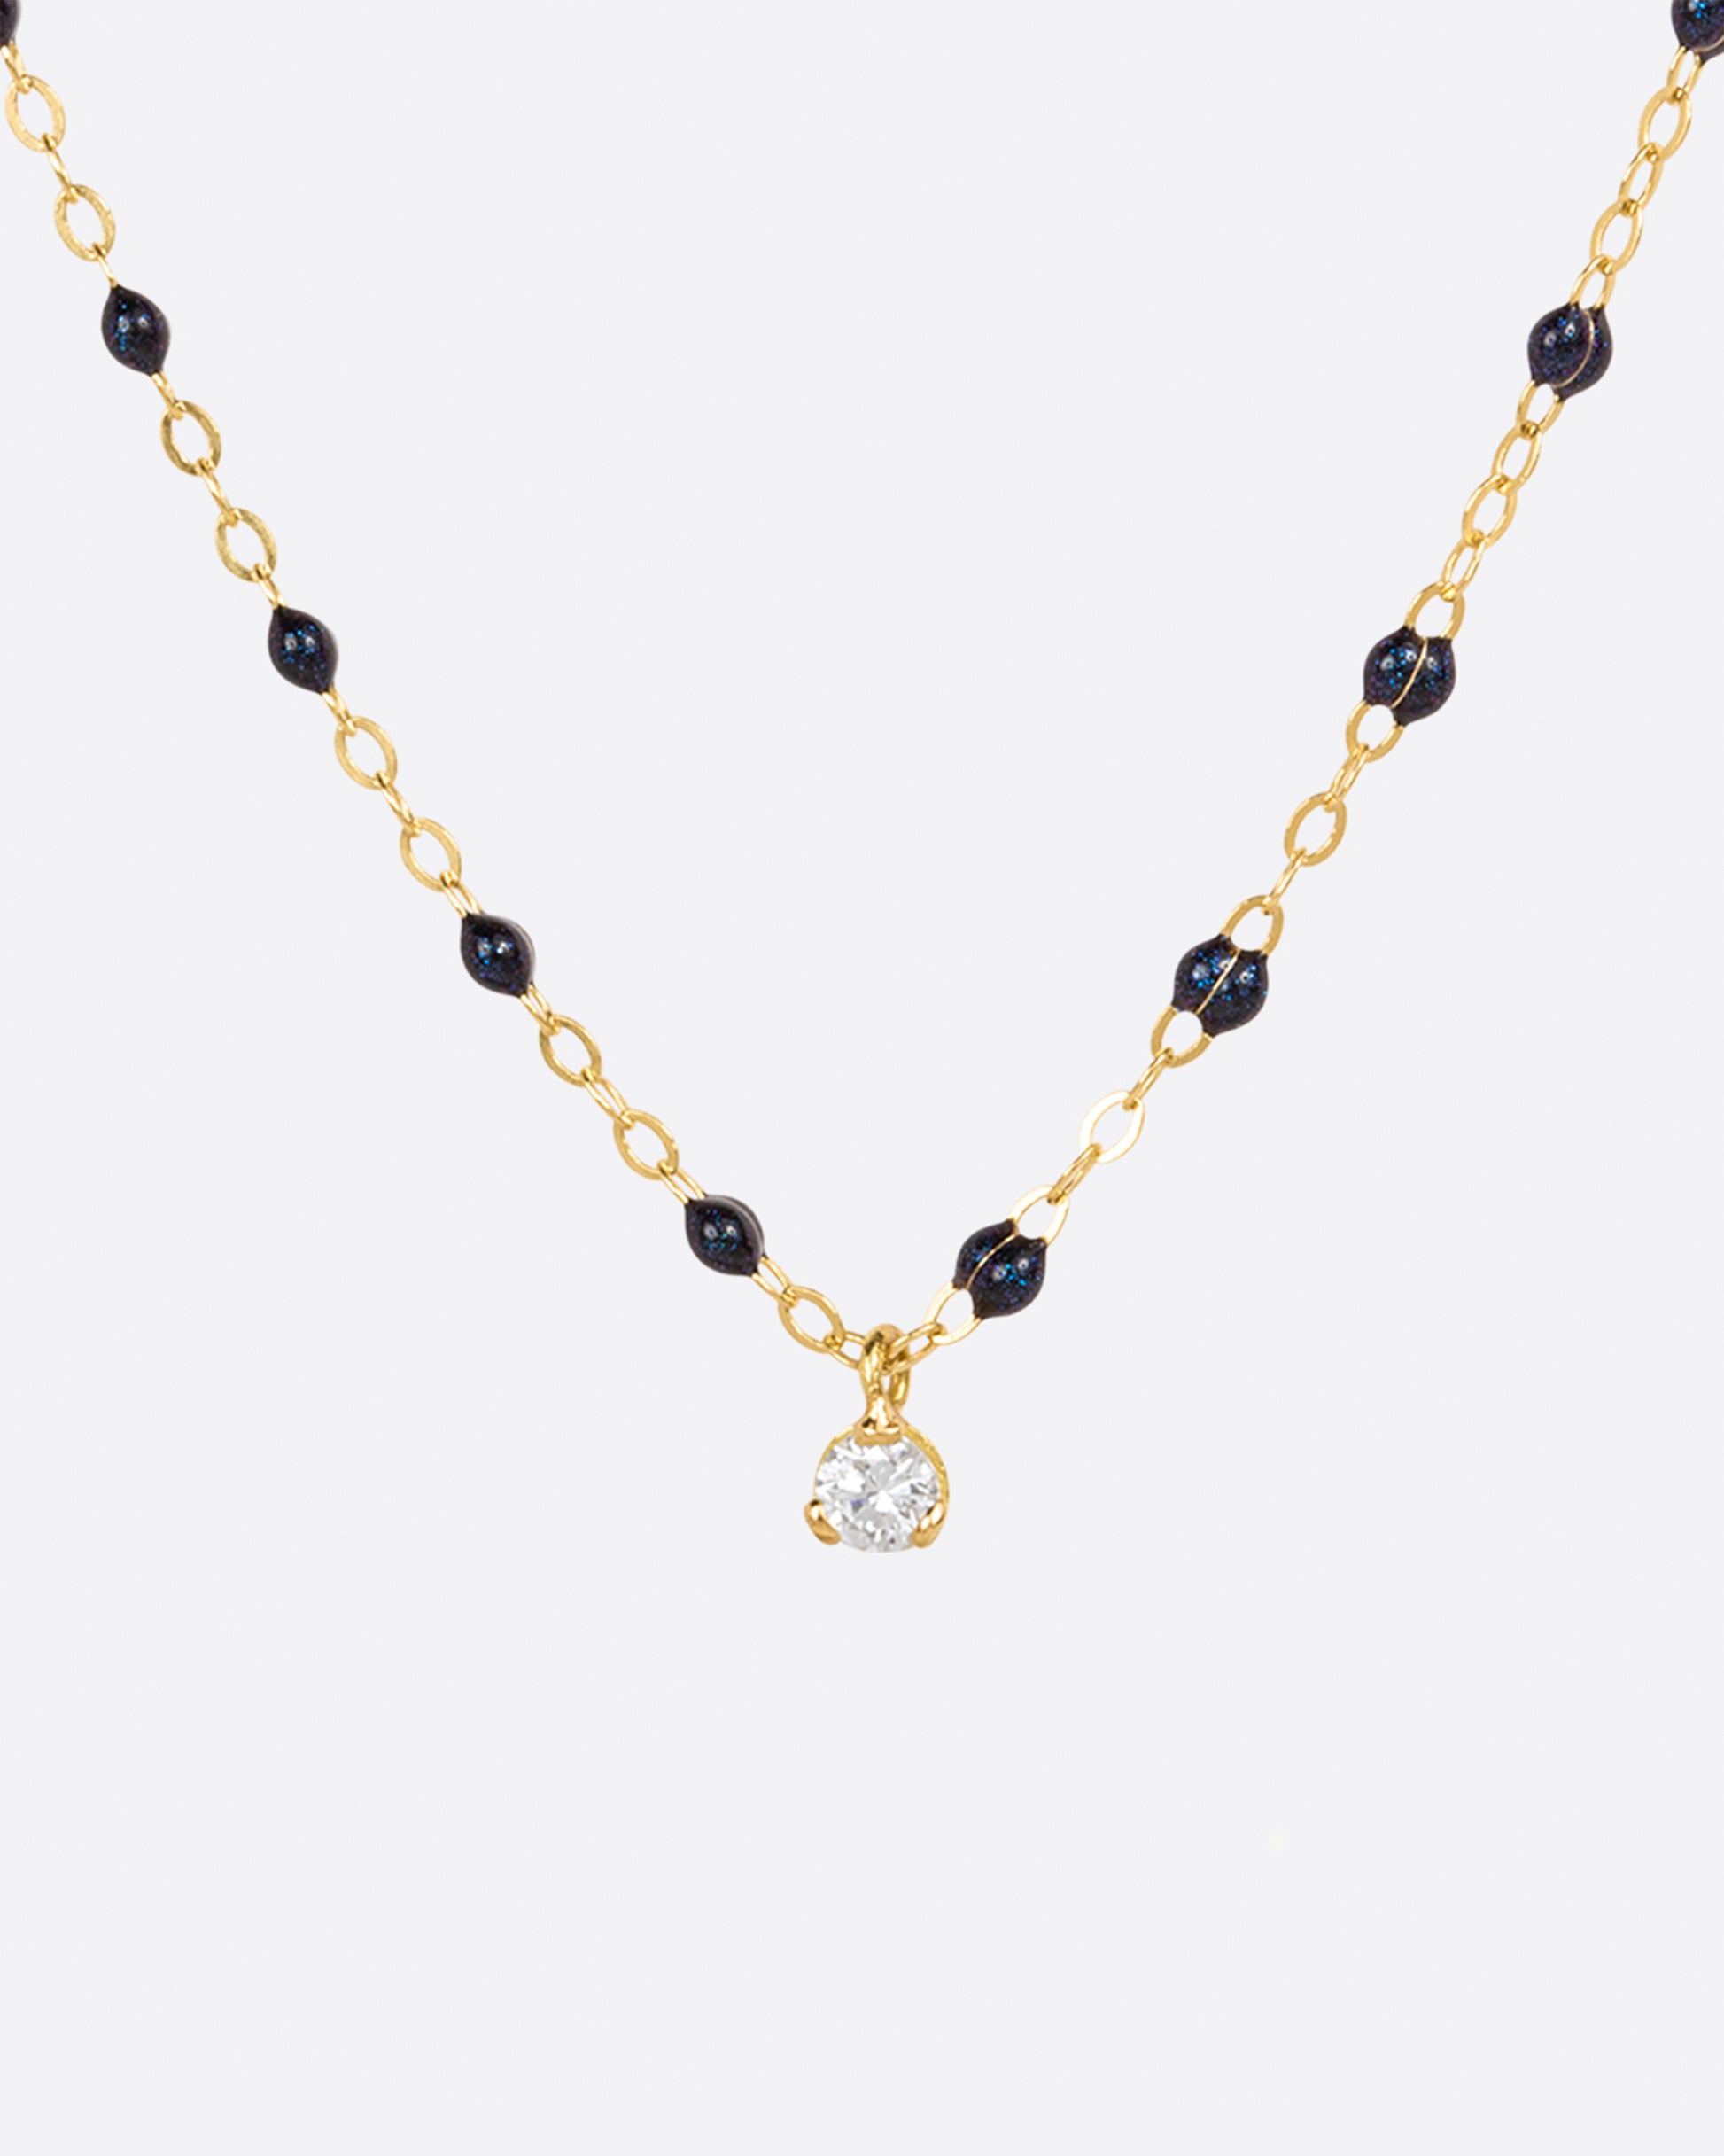 A classic Gigi Clozeau necklace with midnight blue resin beads and a single diamond charm.